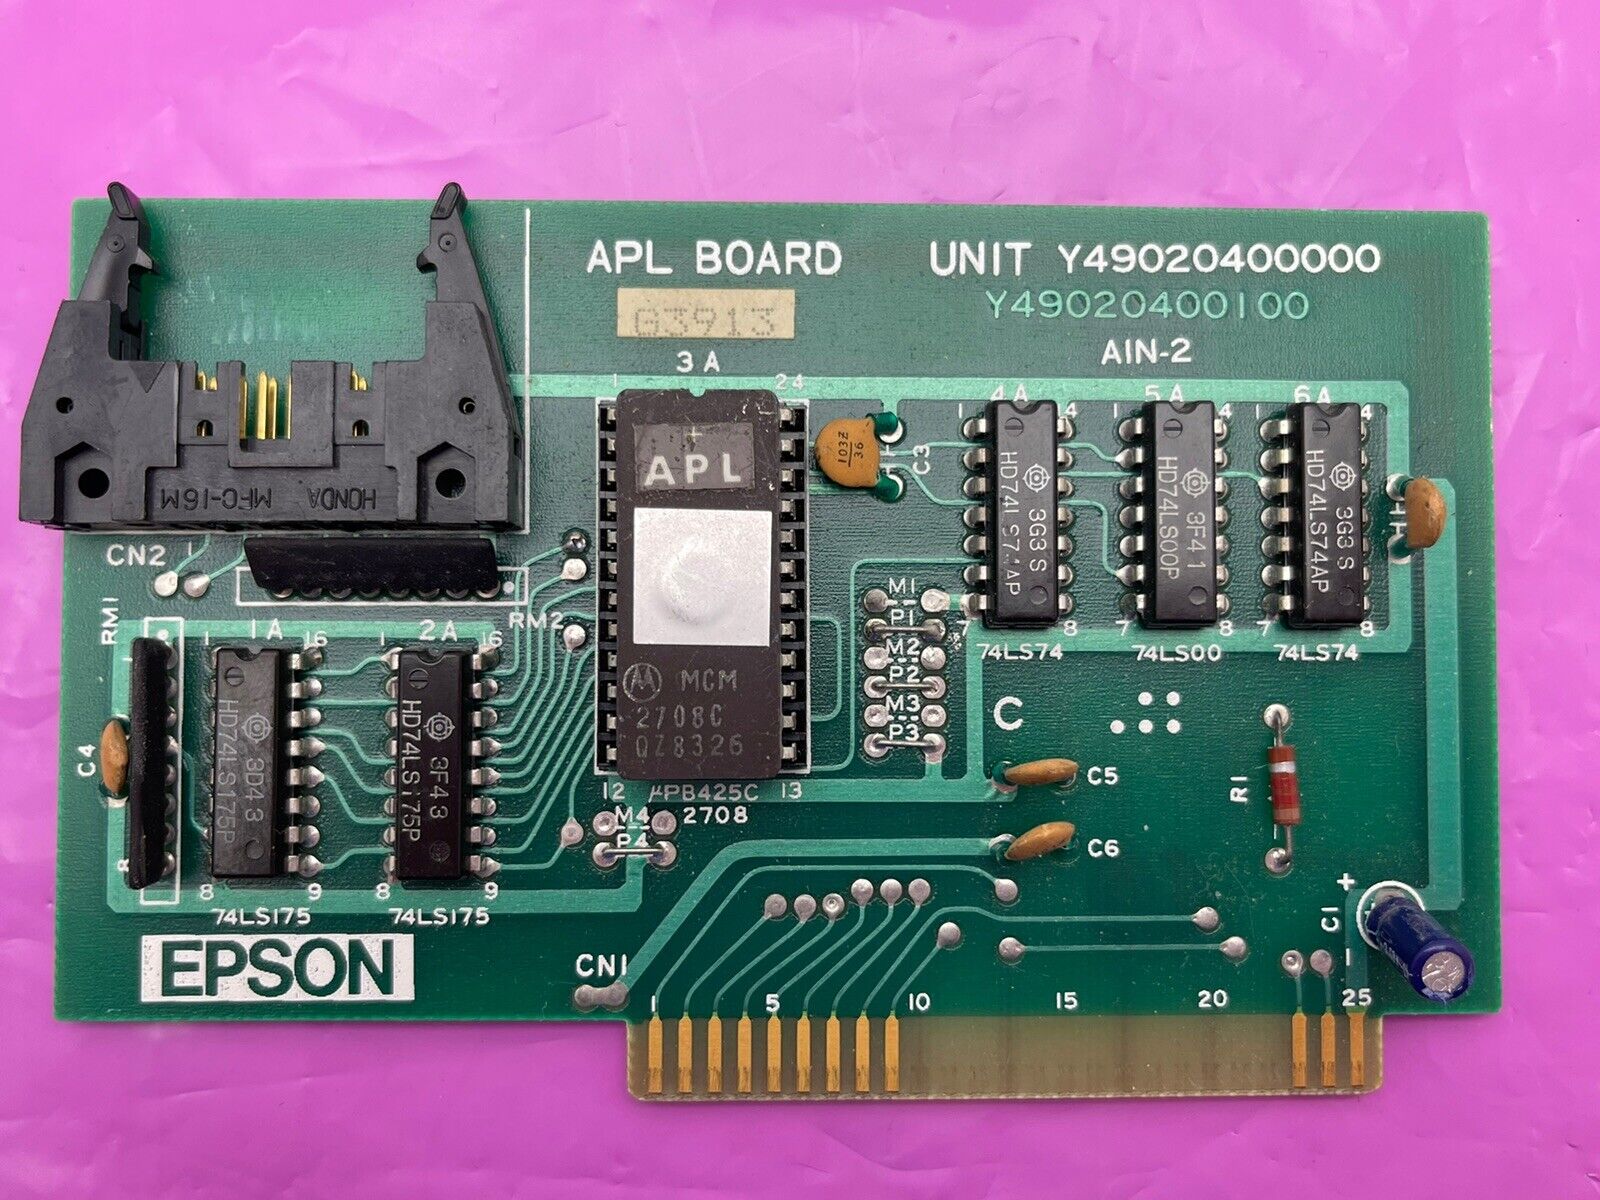 ✅ Vintage Epson APL Board Printer Interface Card Unit Y49020400000 Apple II ][